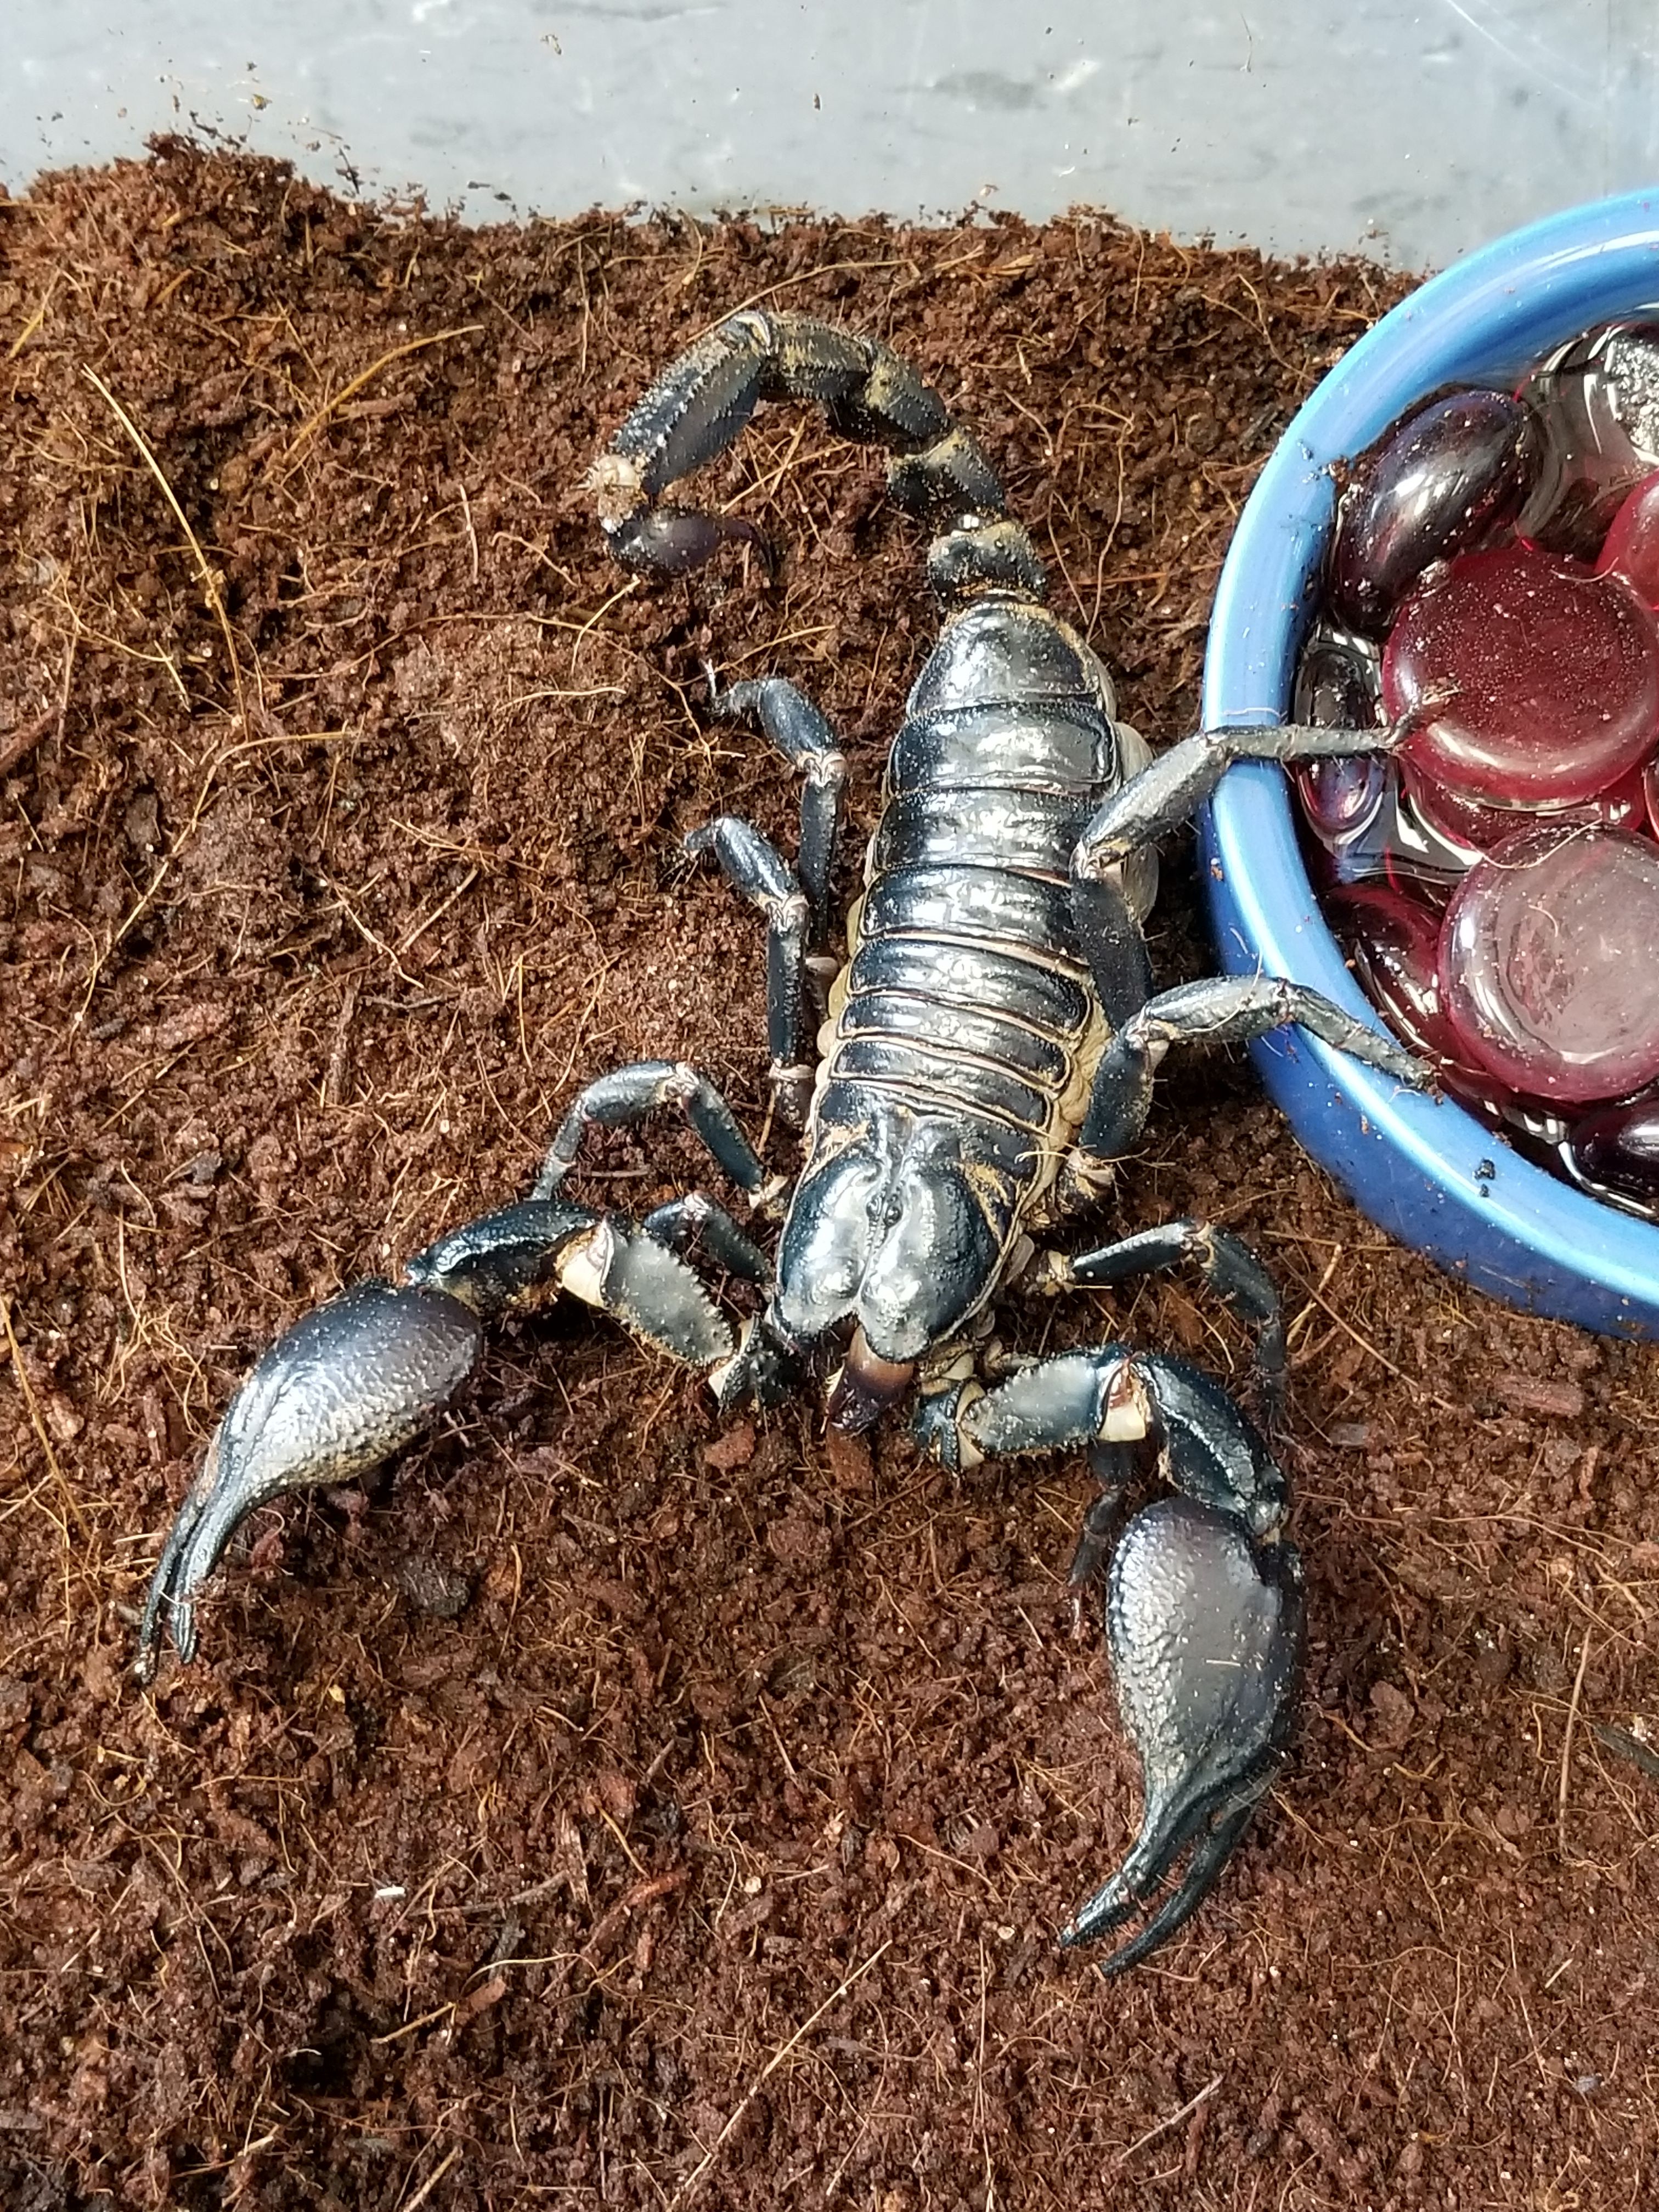 Why Do Scorpions Glow Under Blacklight